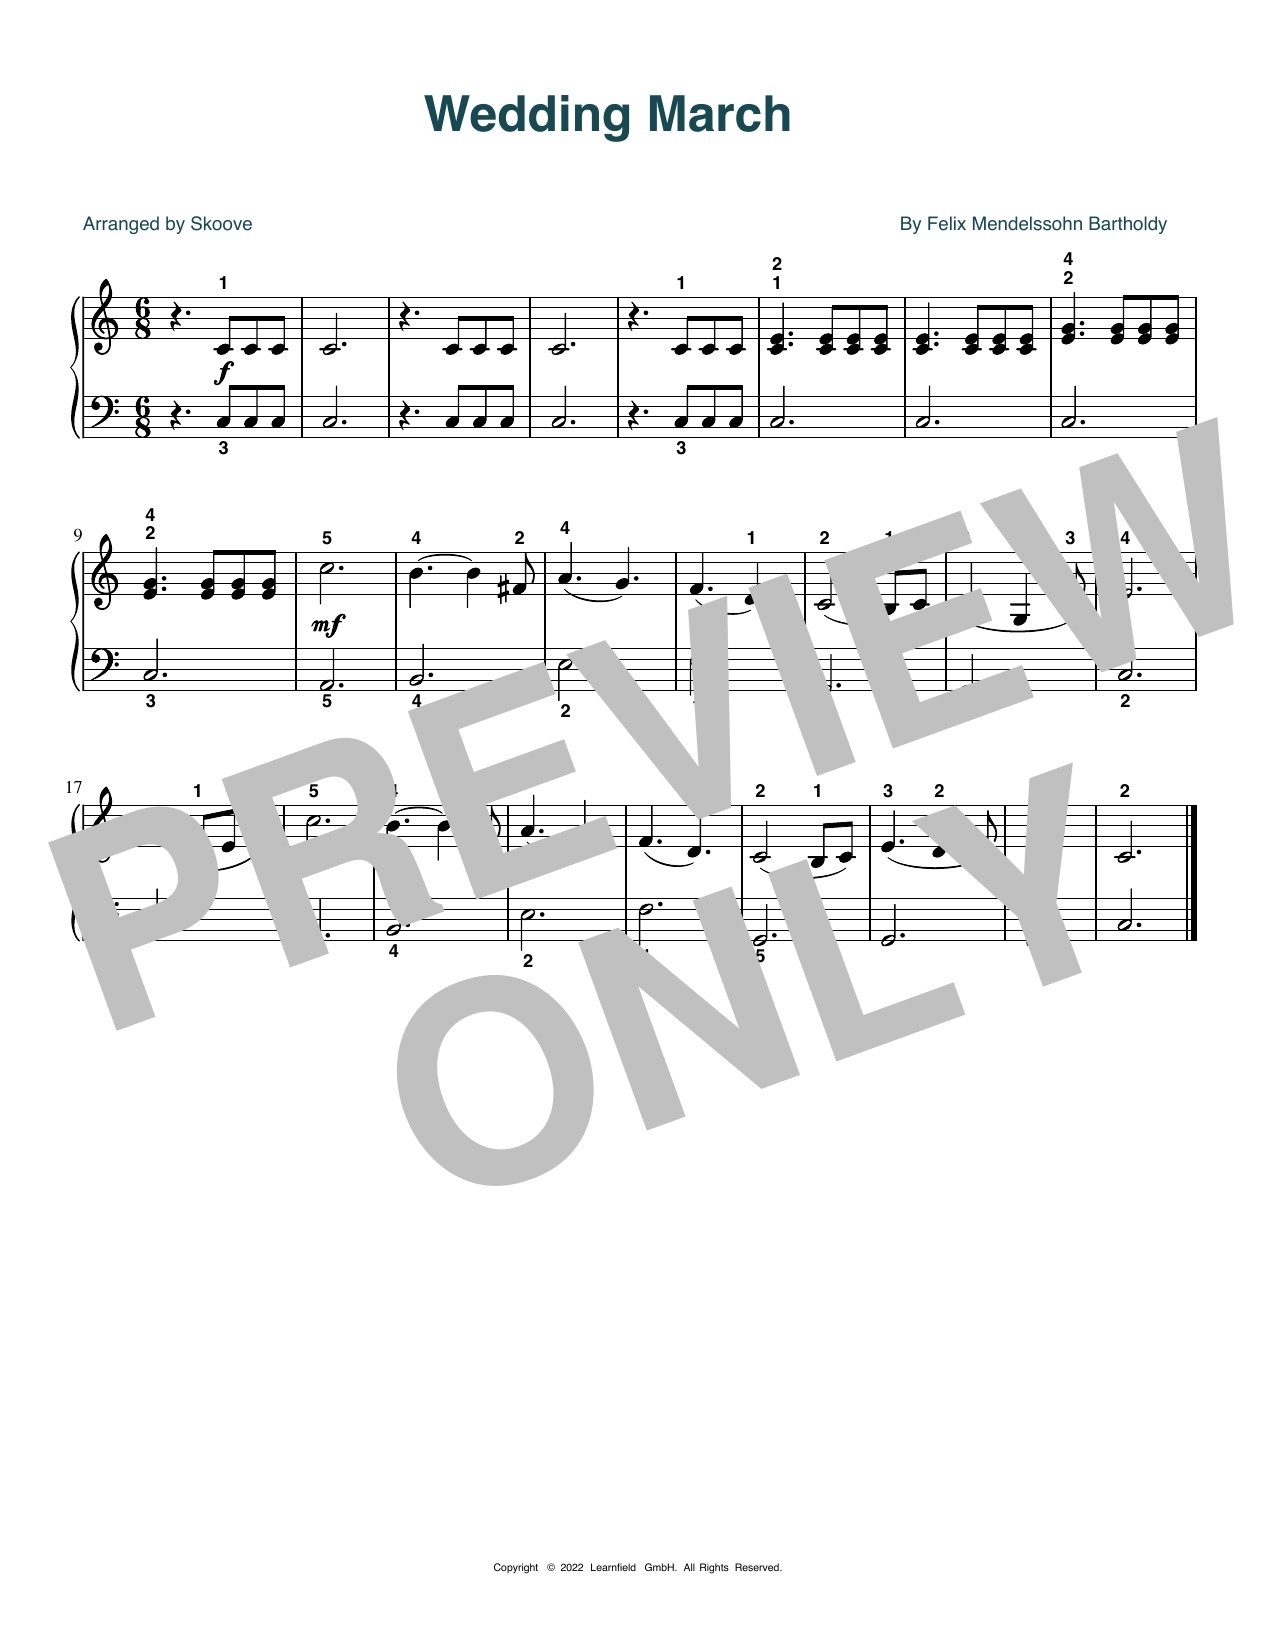 Felix Mendelssohn Bartholdy Wedding March (arr. Skoove) Sheet Music Notes & Chords for Beginner Piano (Abridged) - Download or Print PDF